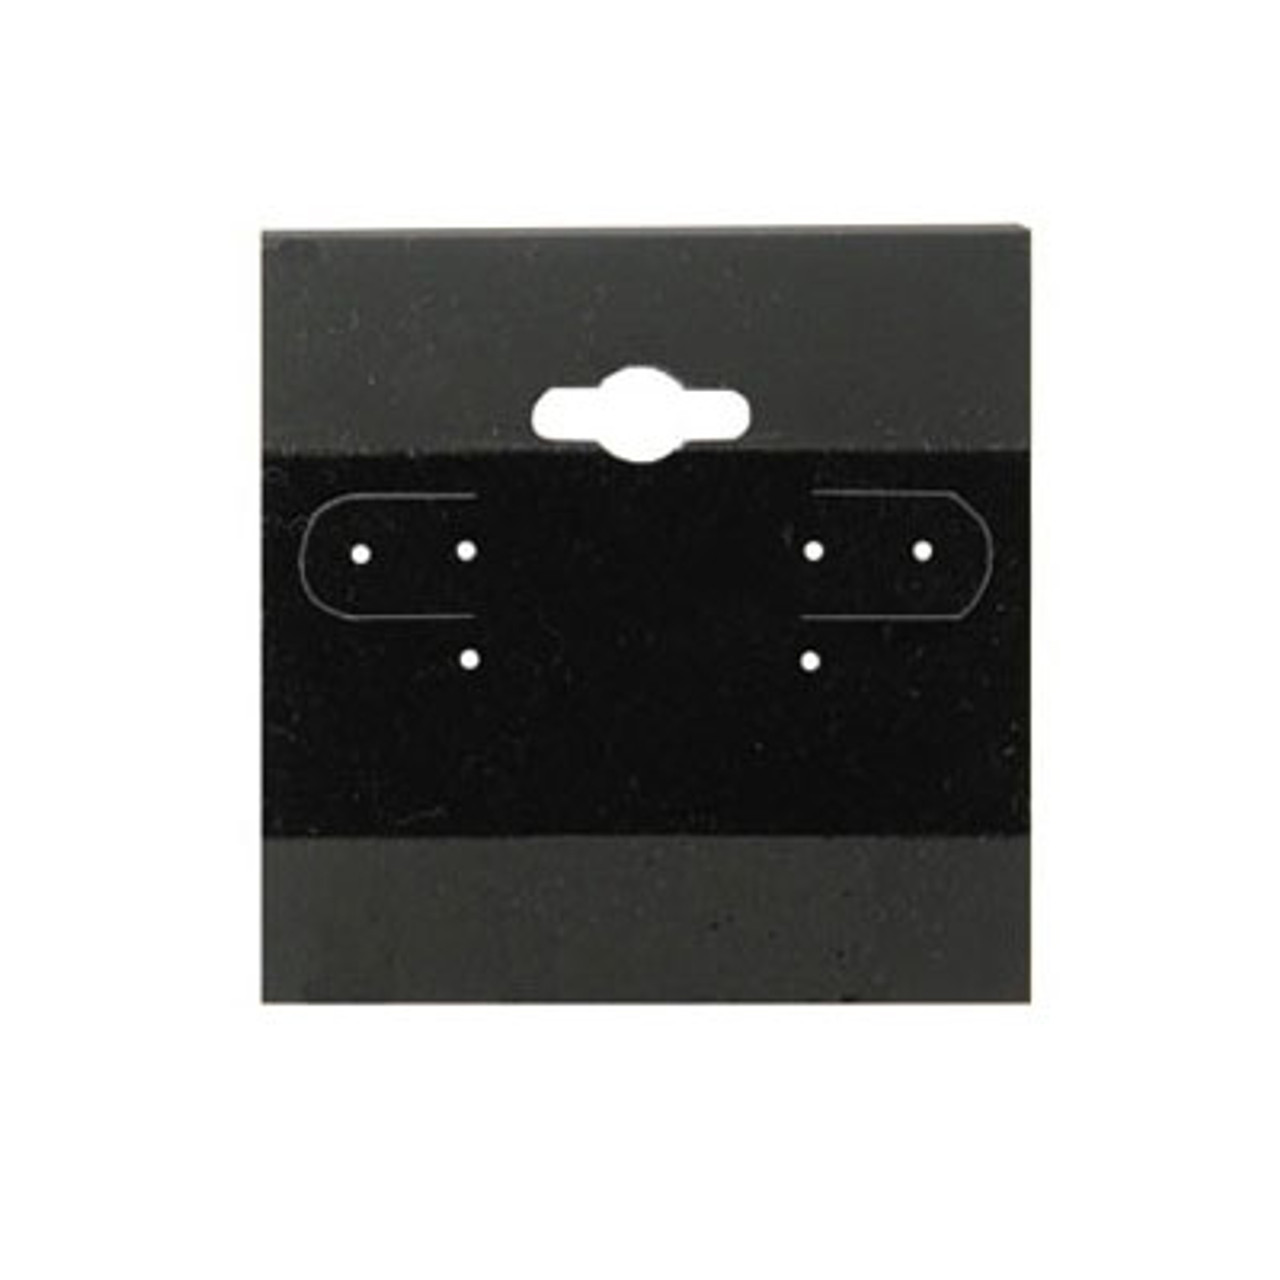 Hanging Earring Card (Plain BX573) 2x 2 - Eds Box & Supply Co.